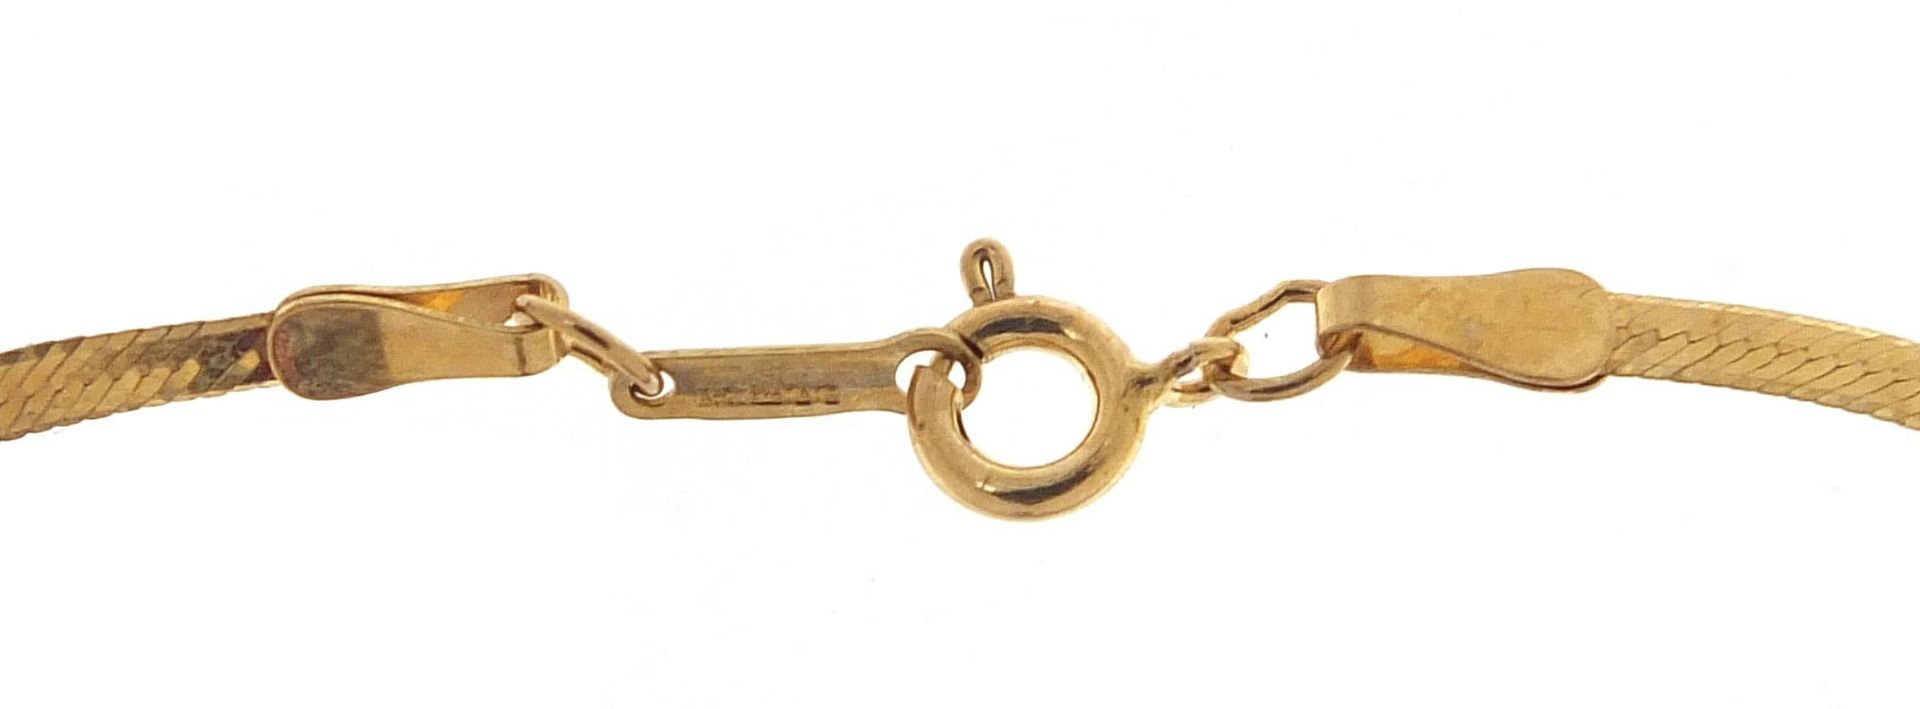 9ct gold herringbone link bracelet, 18cm in length, 0.9g - Image 3 of 5